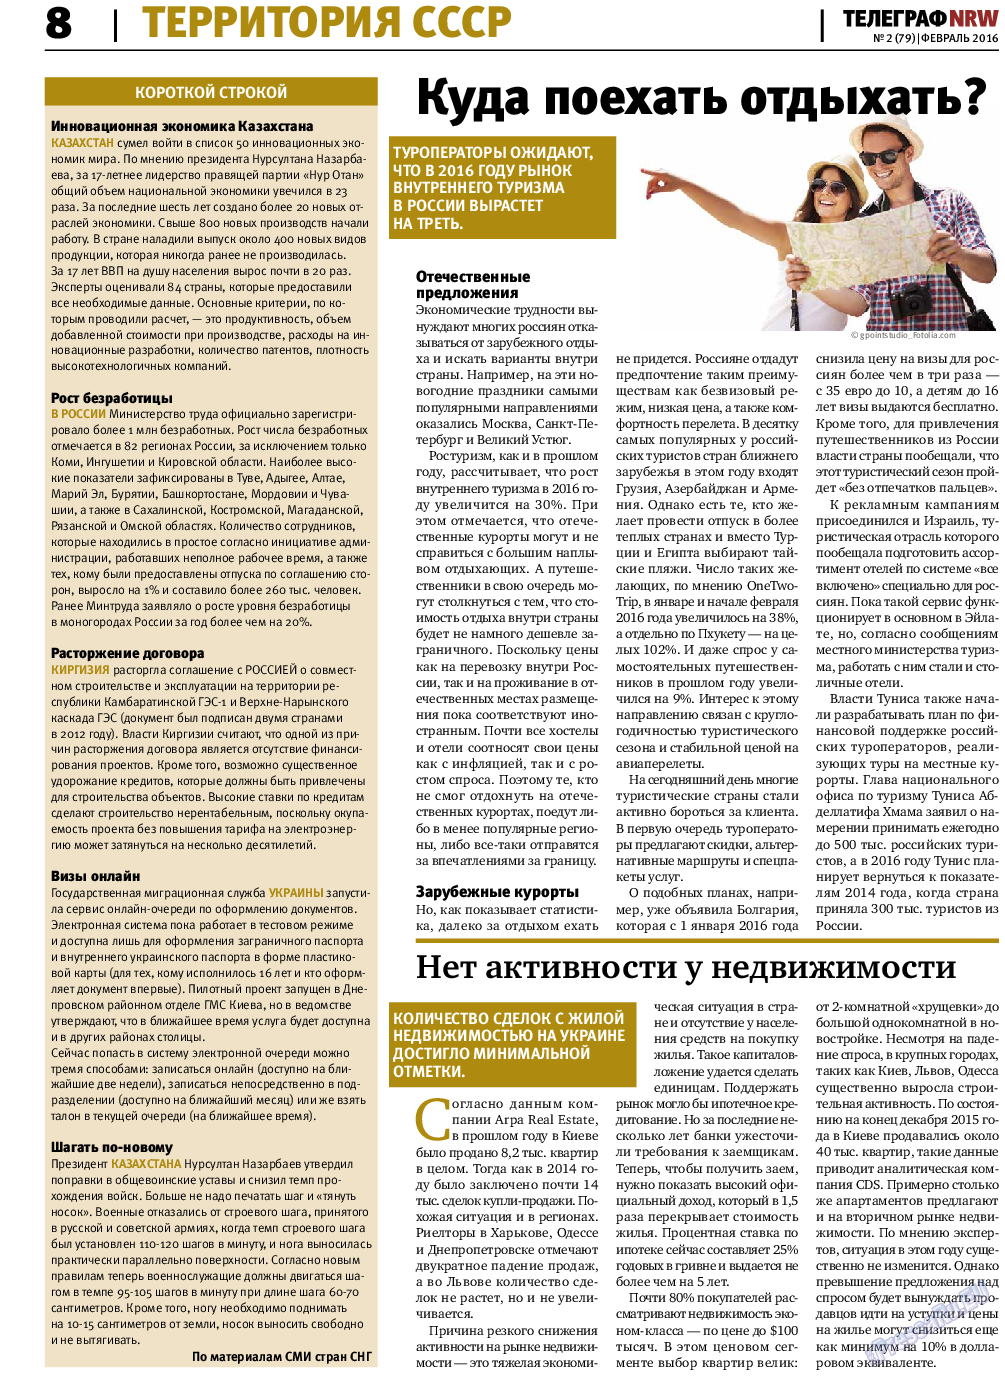 Телеграф NRW, газета. 2016 №2 стр.8